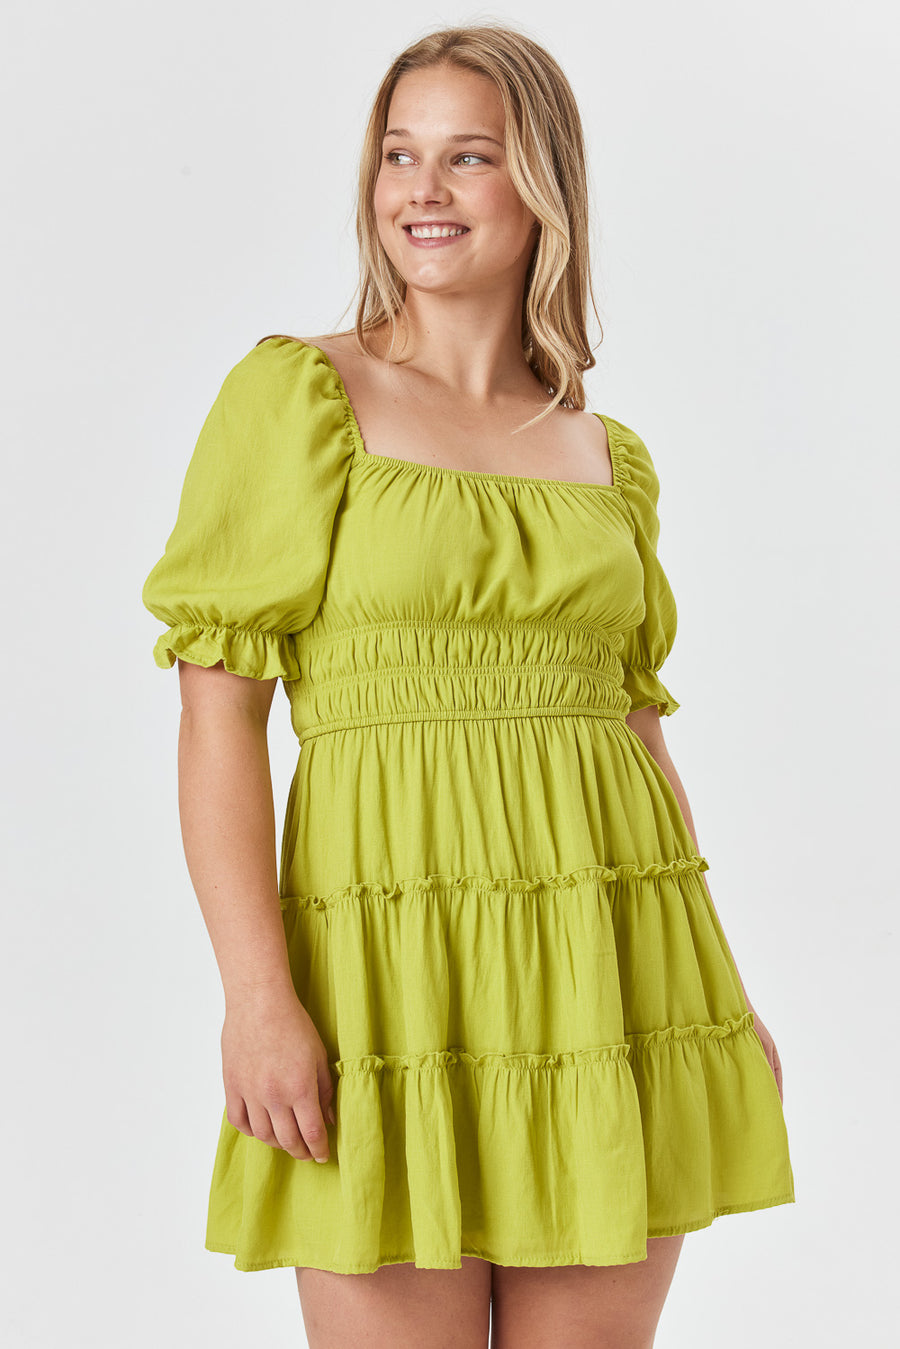 Apple Green Tier Dress - Trixxi Clothing